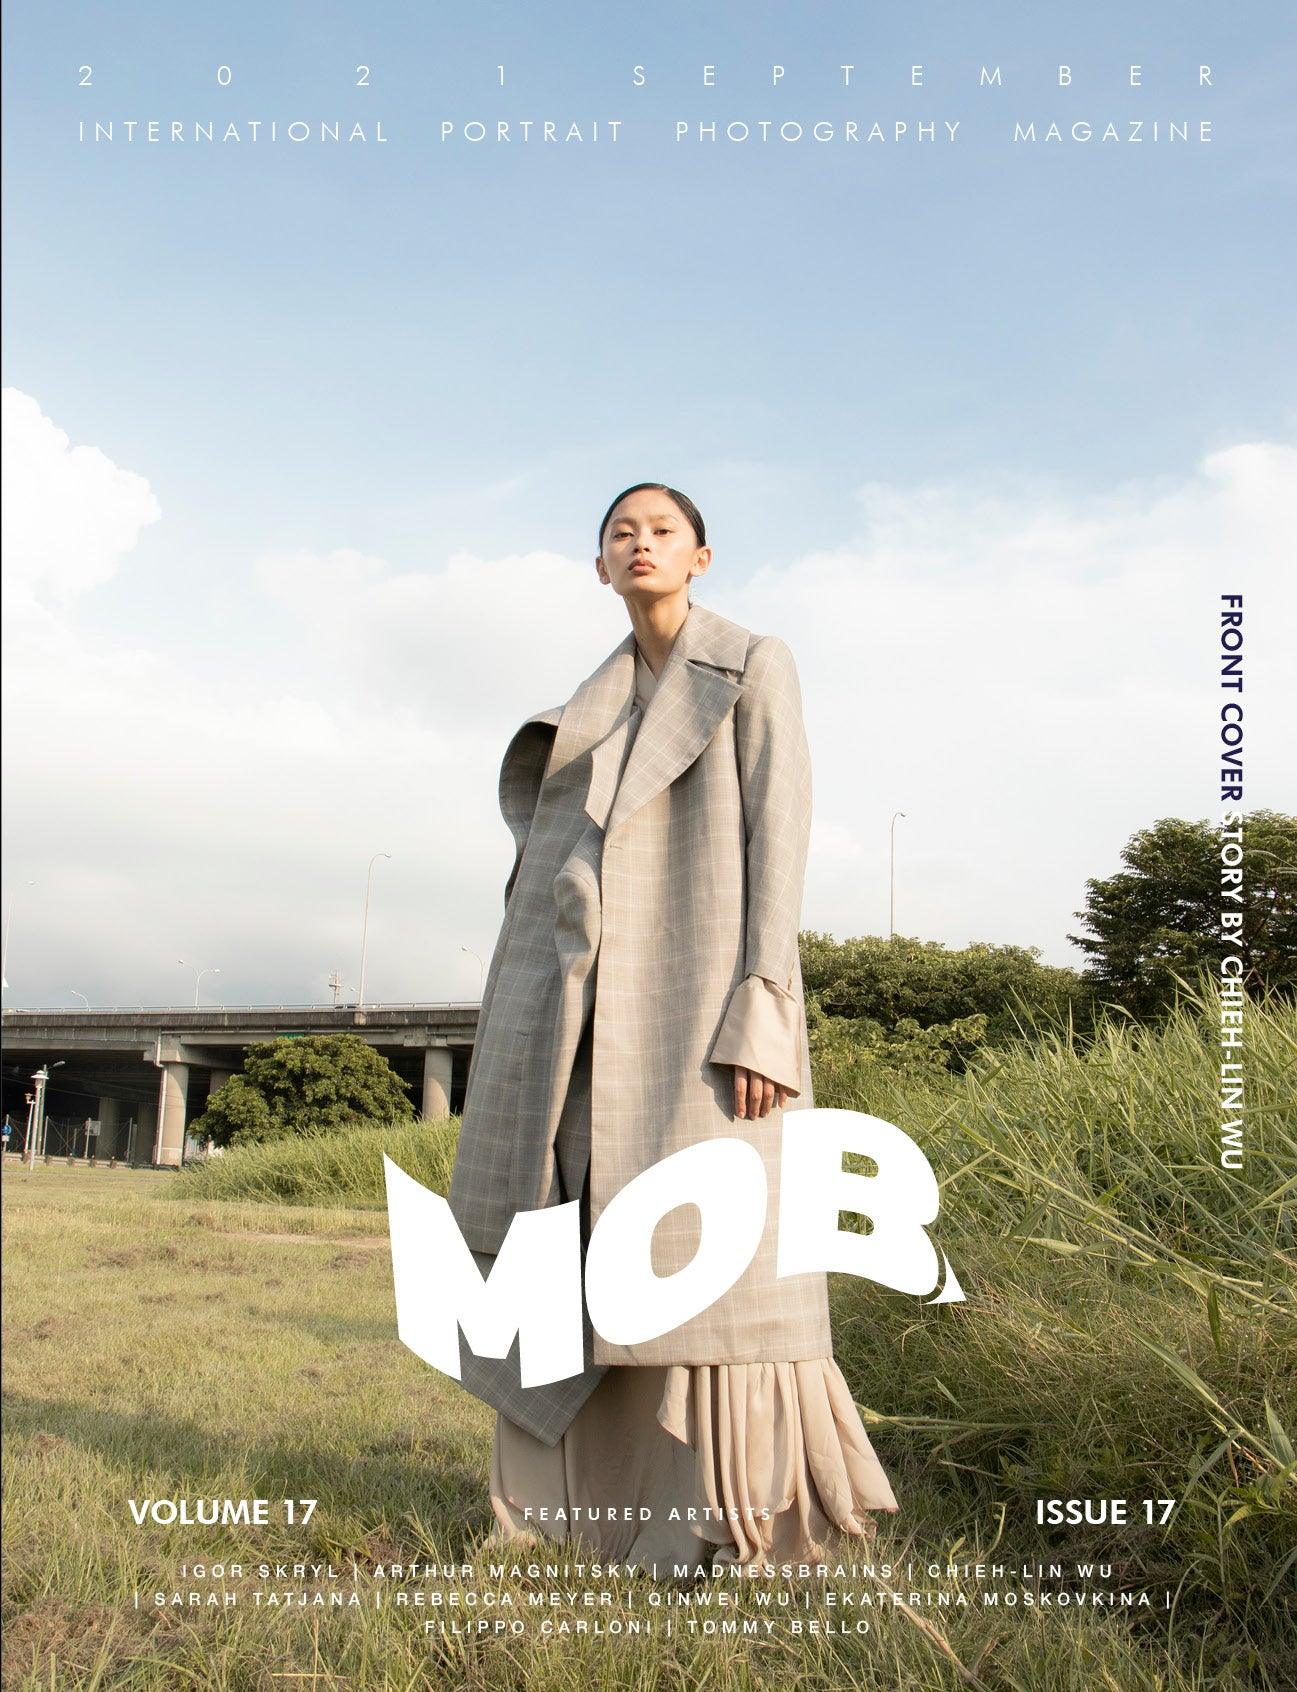 MOB JOURNAL | VOLUME SEVENTEEN | ISSUE #17 - Mob Journal